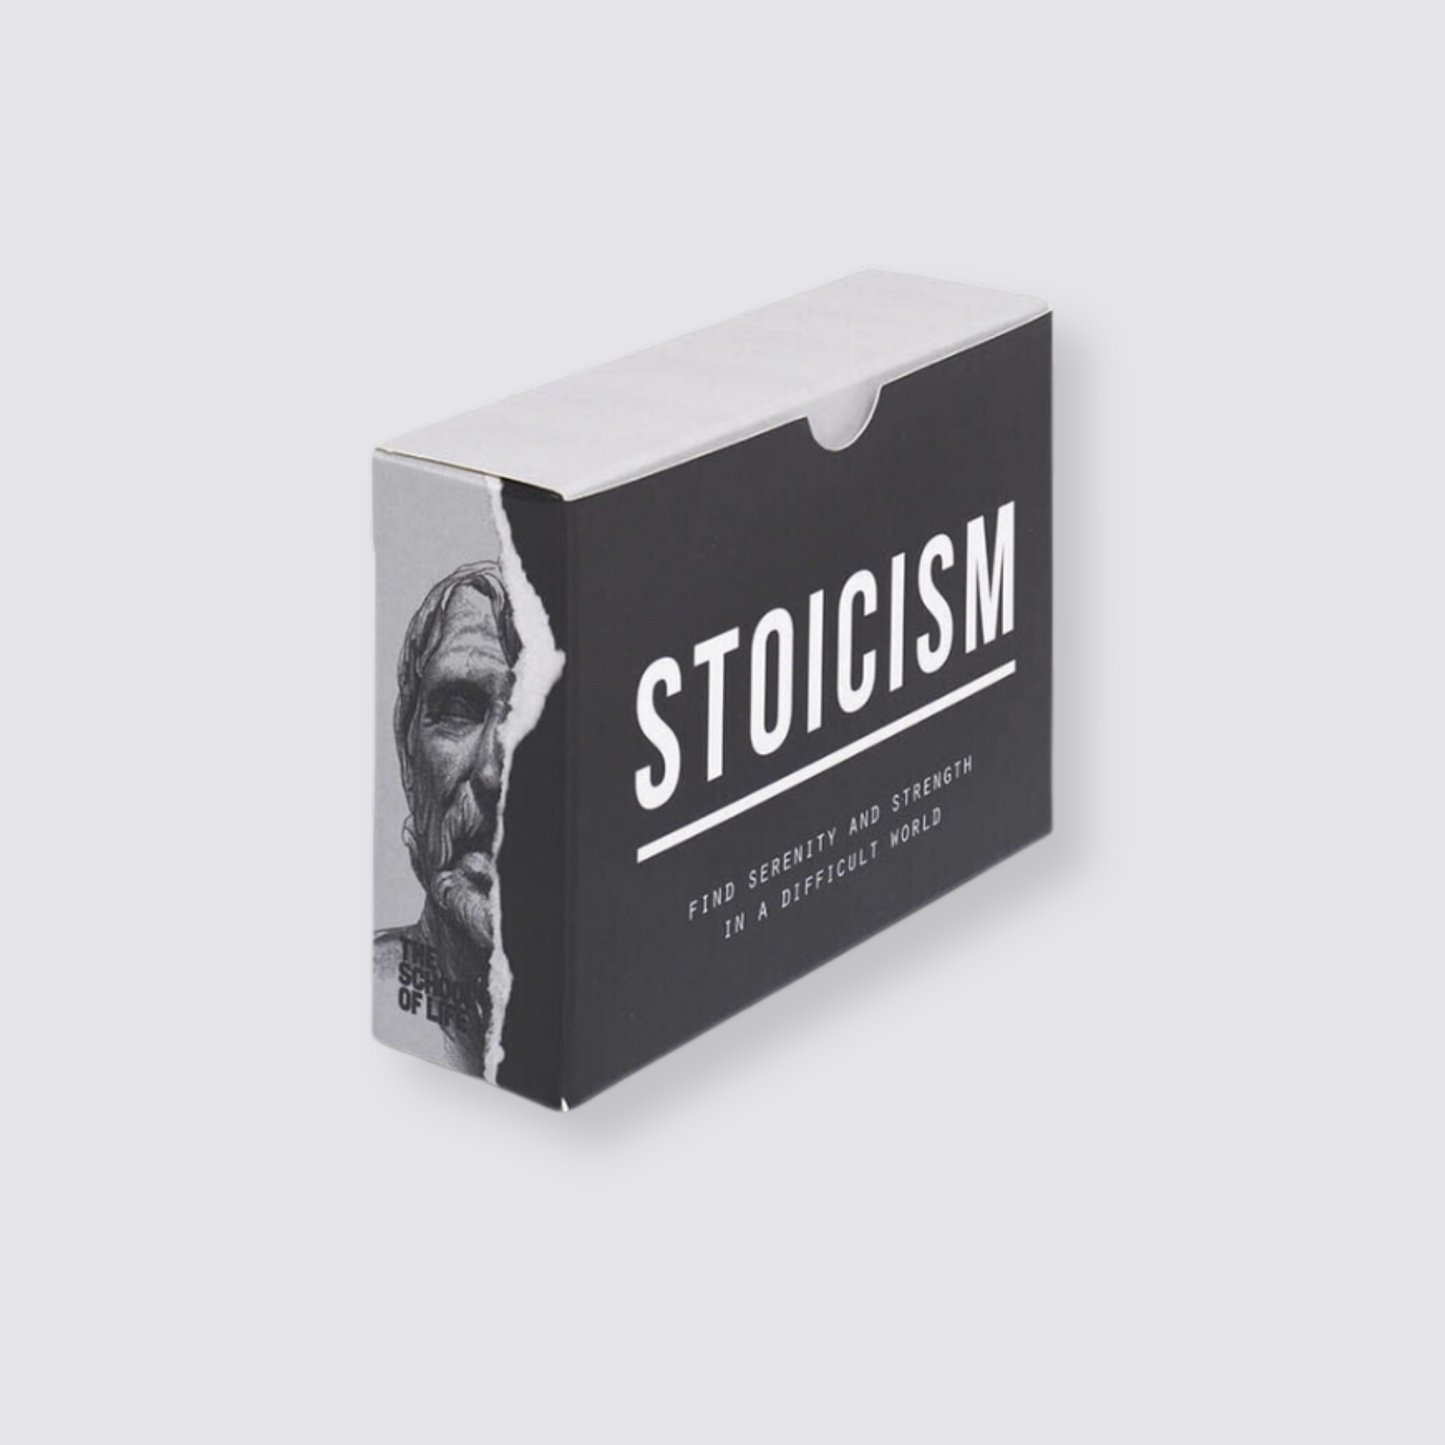 Stoicism philosophy cards